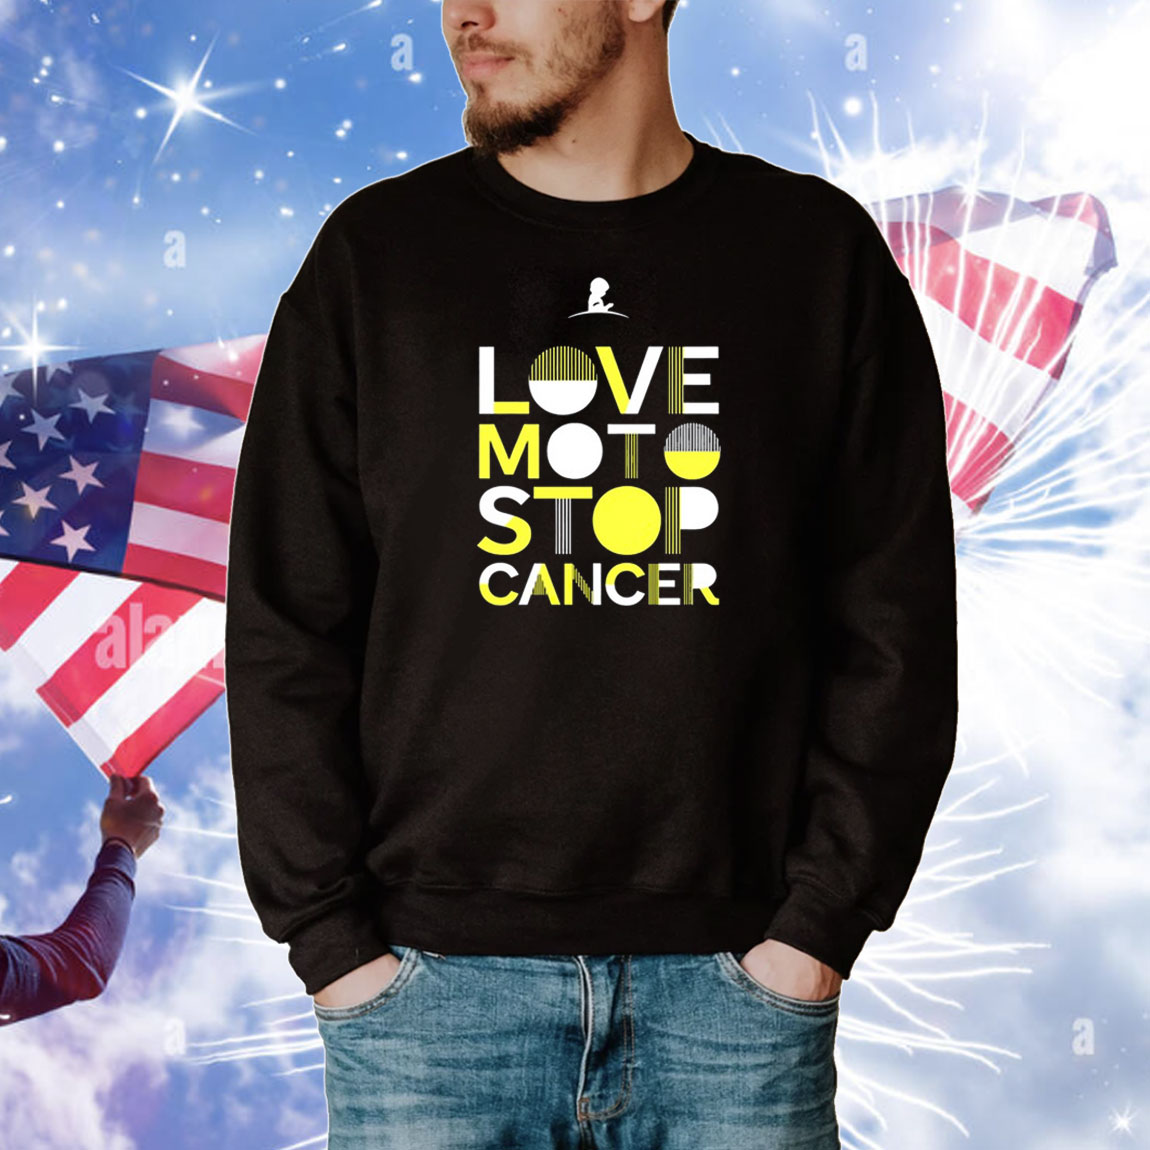 St. Jude Love Moto Stop Cancer Tee Shirts